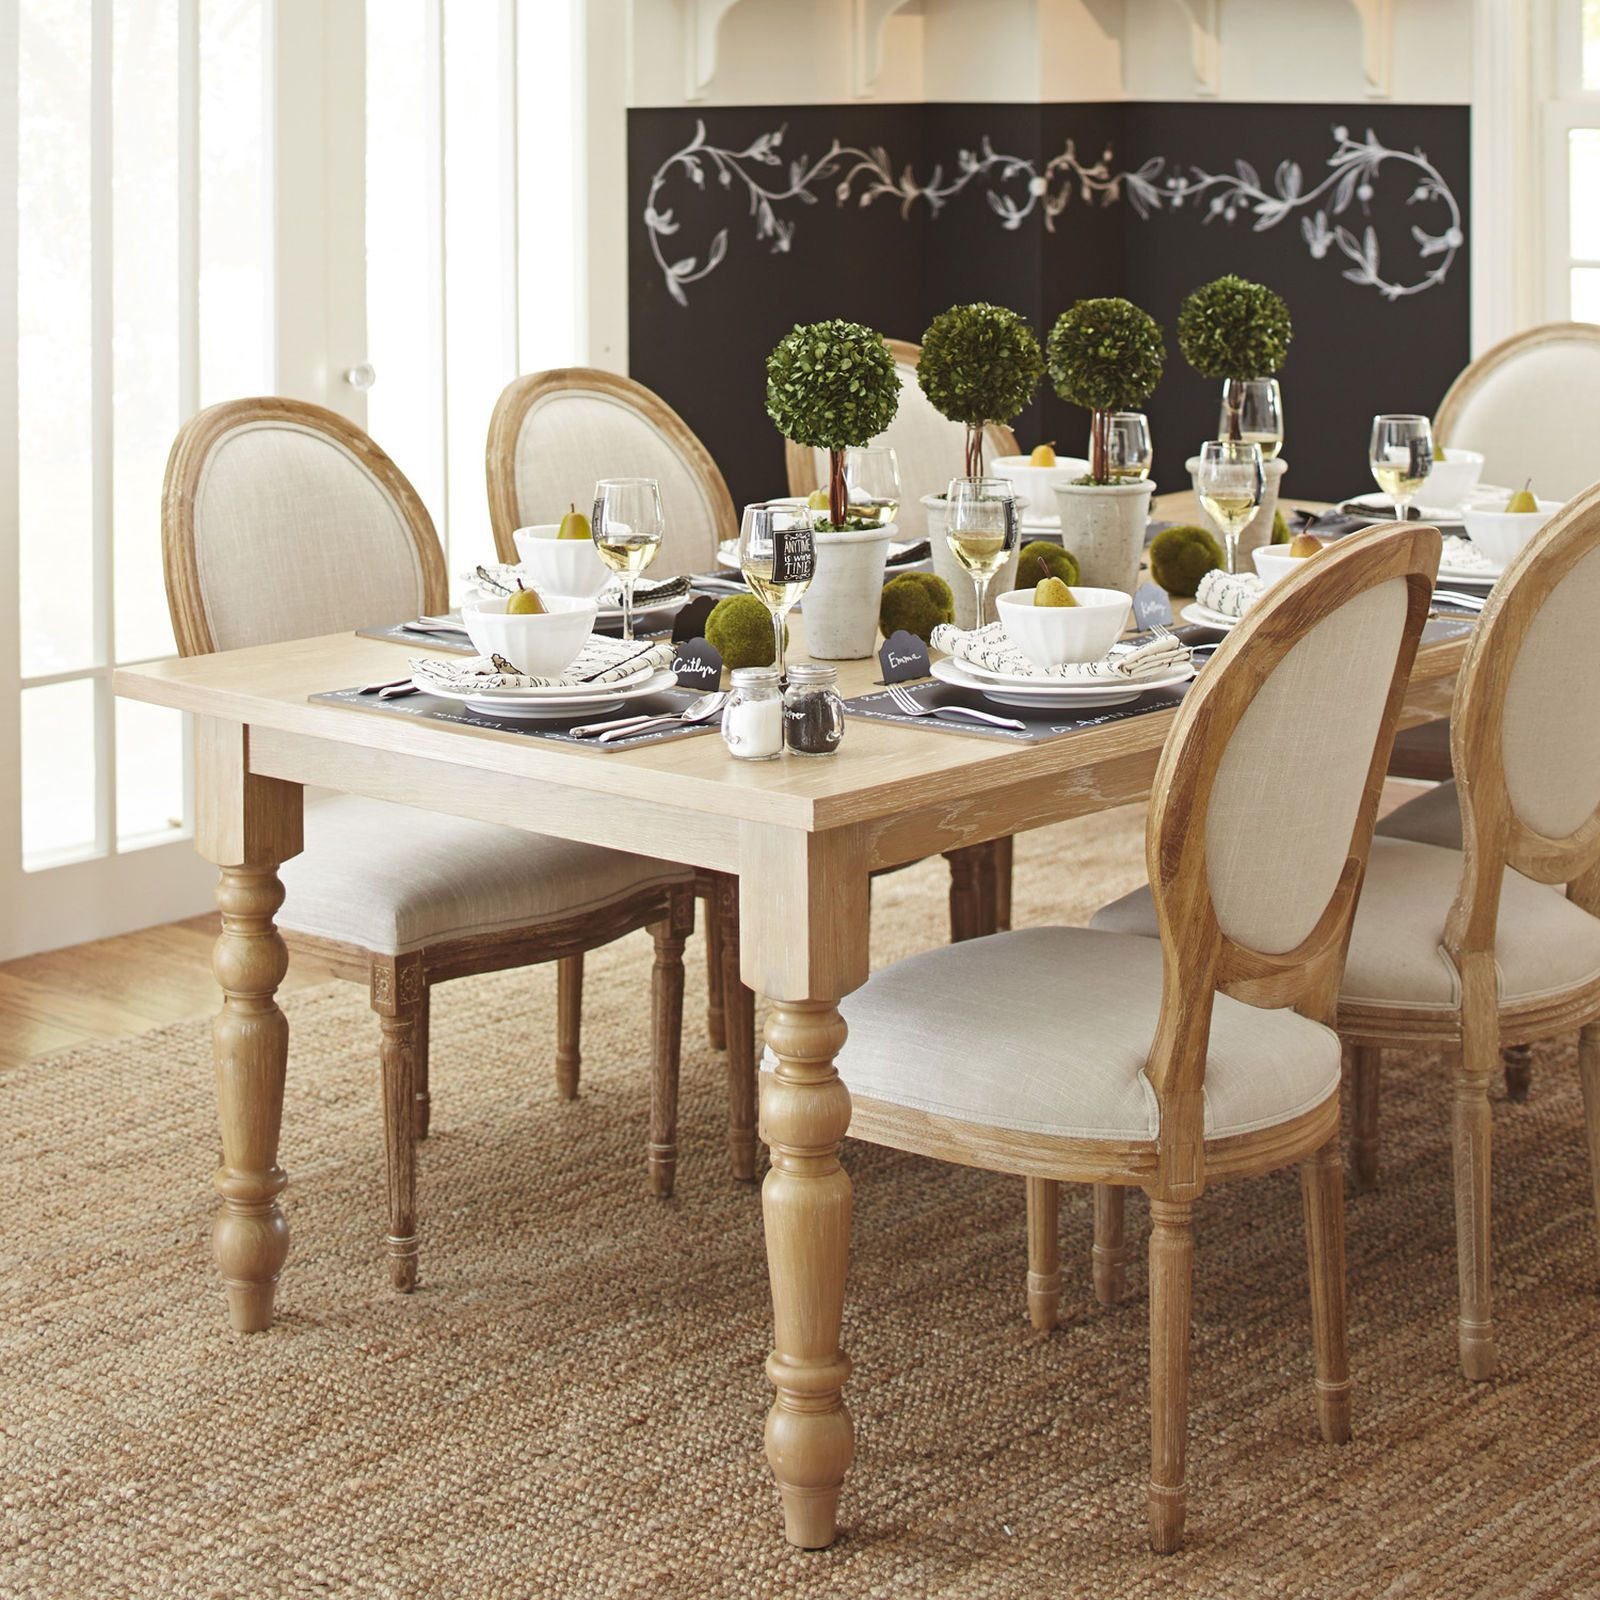 23 Terrific Whitewash Kitchen Tables – Home, Family, Style and Art Ideas